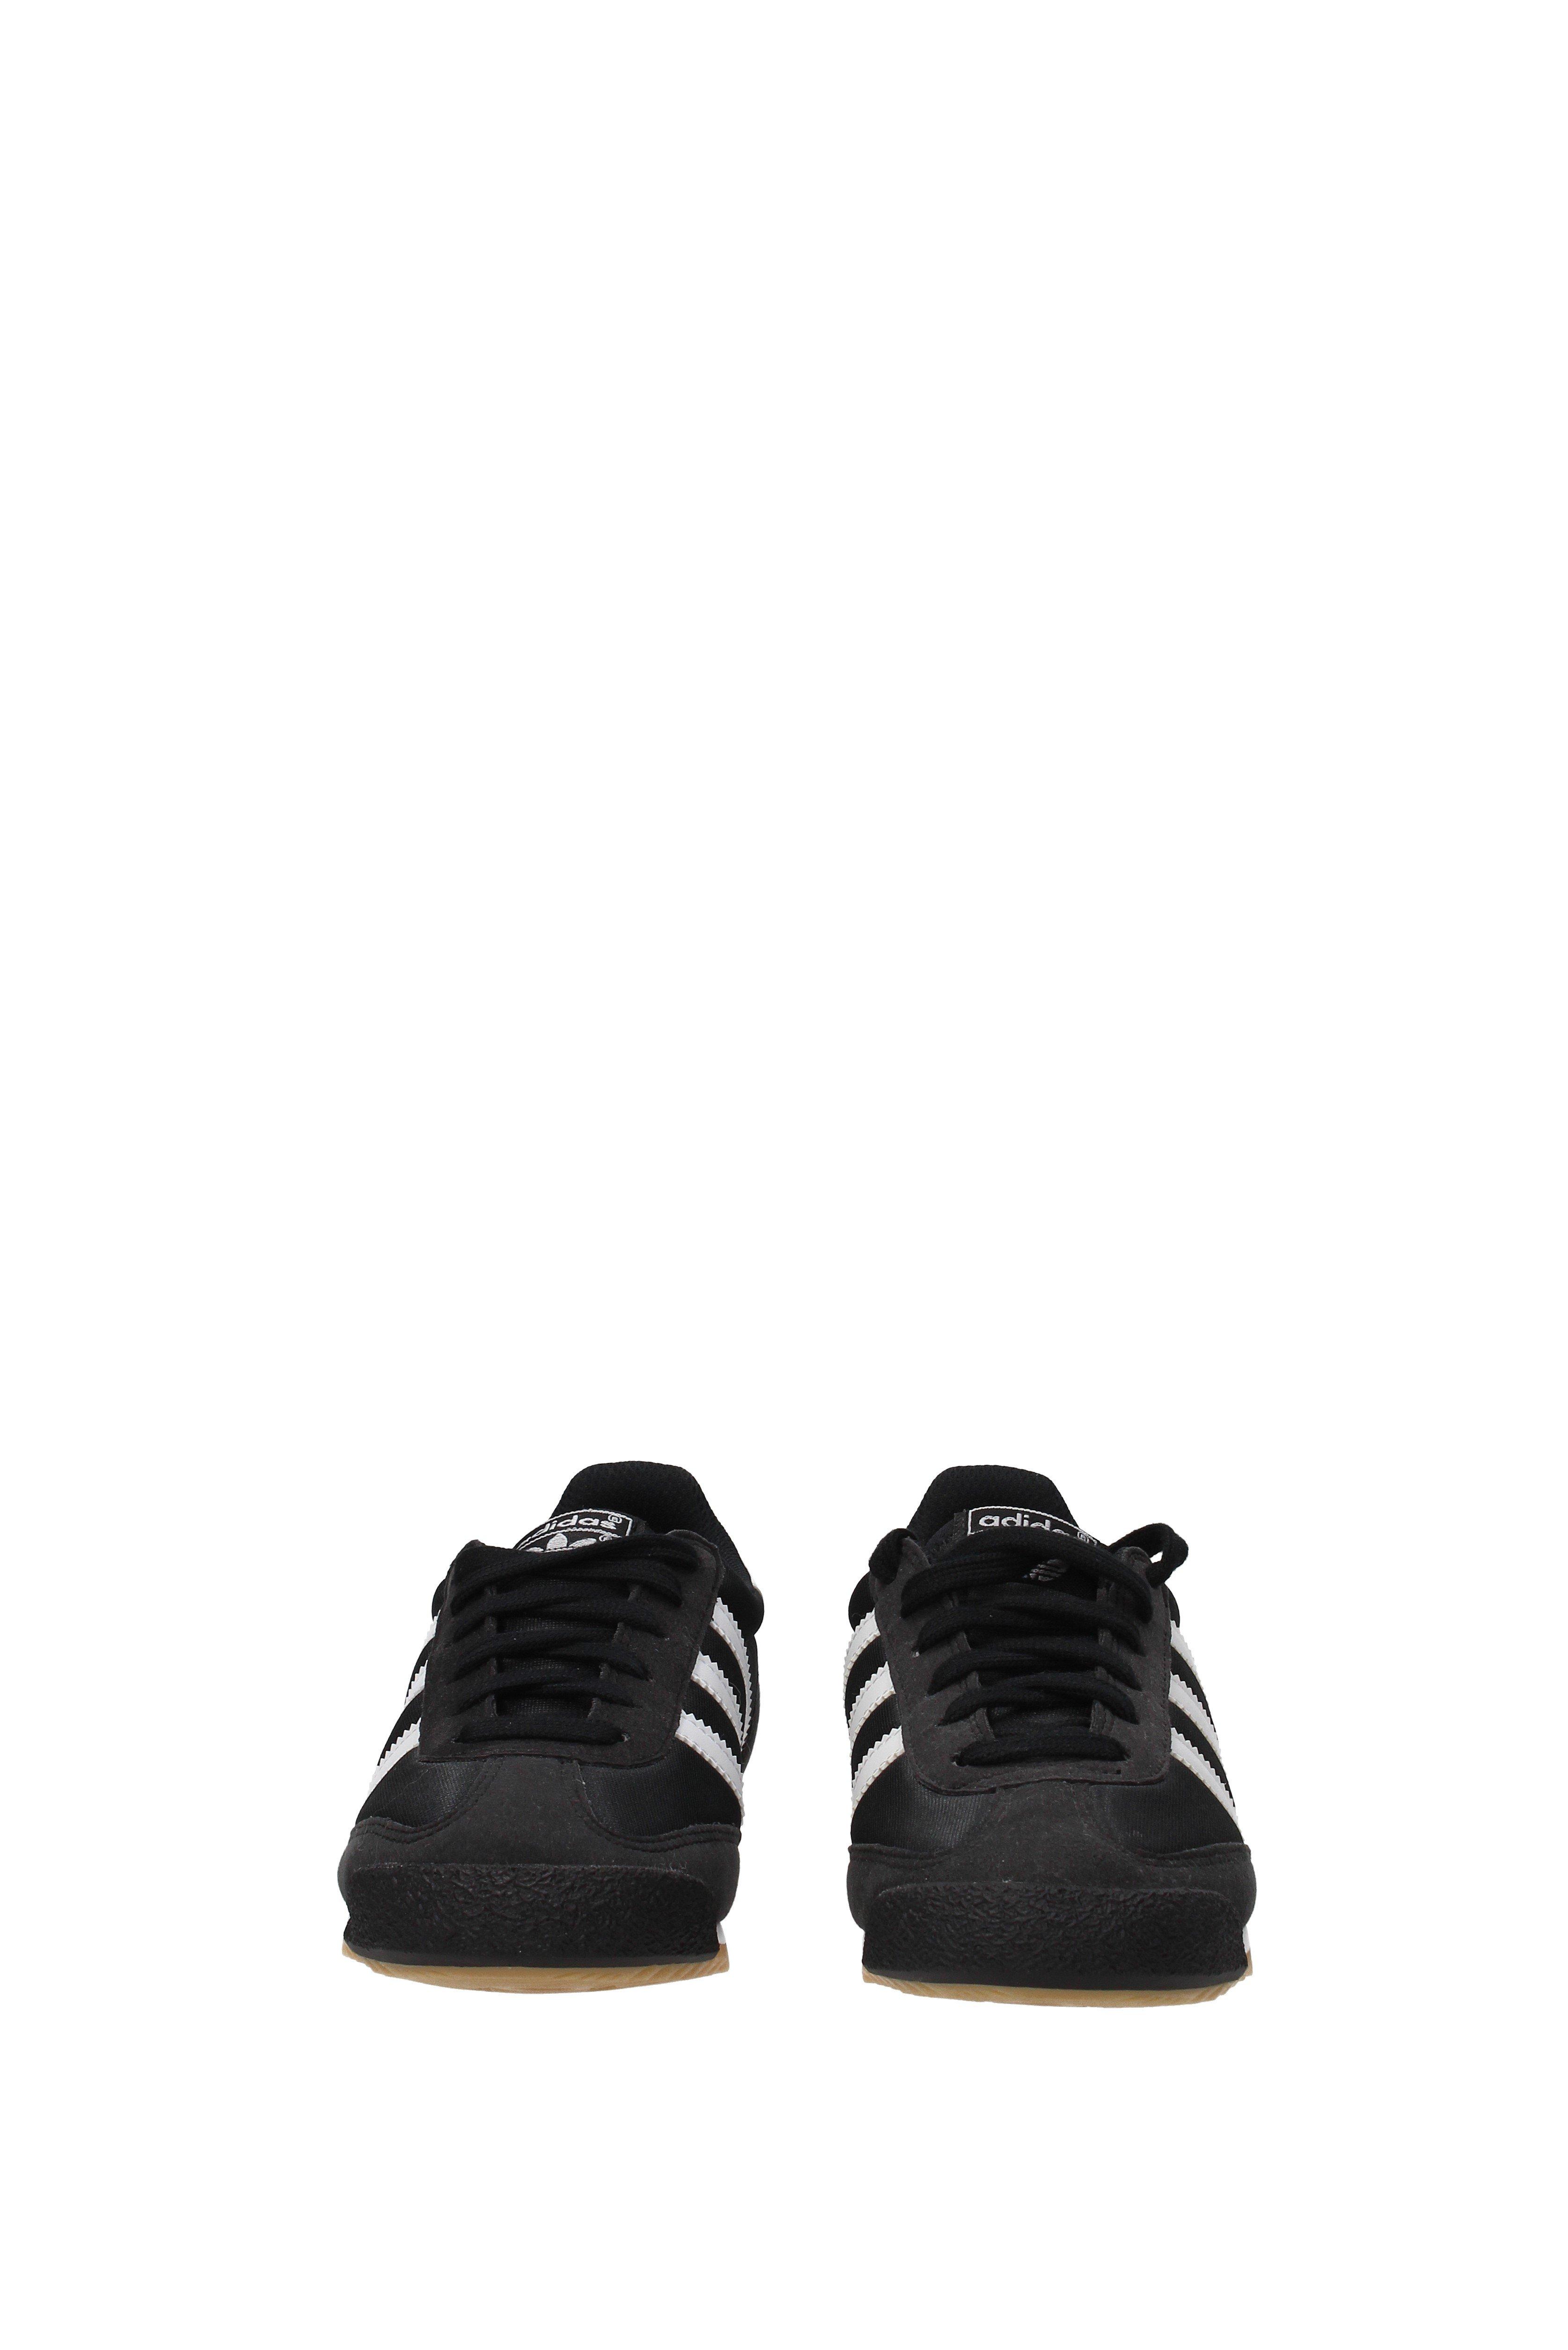 adidas Rubber Sneakers Dragon Og Women Black - Lyst